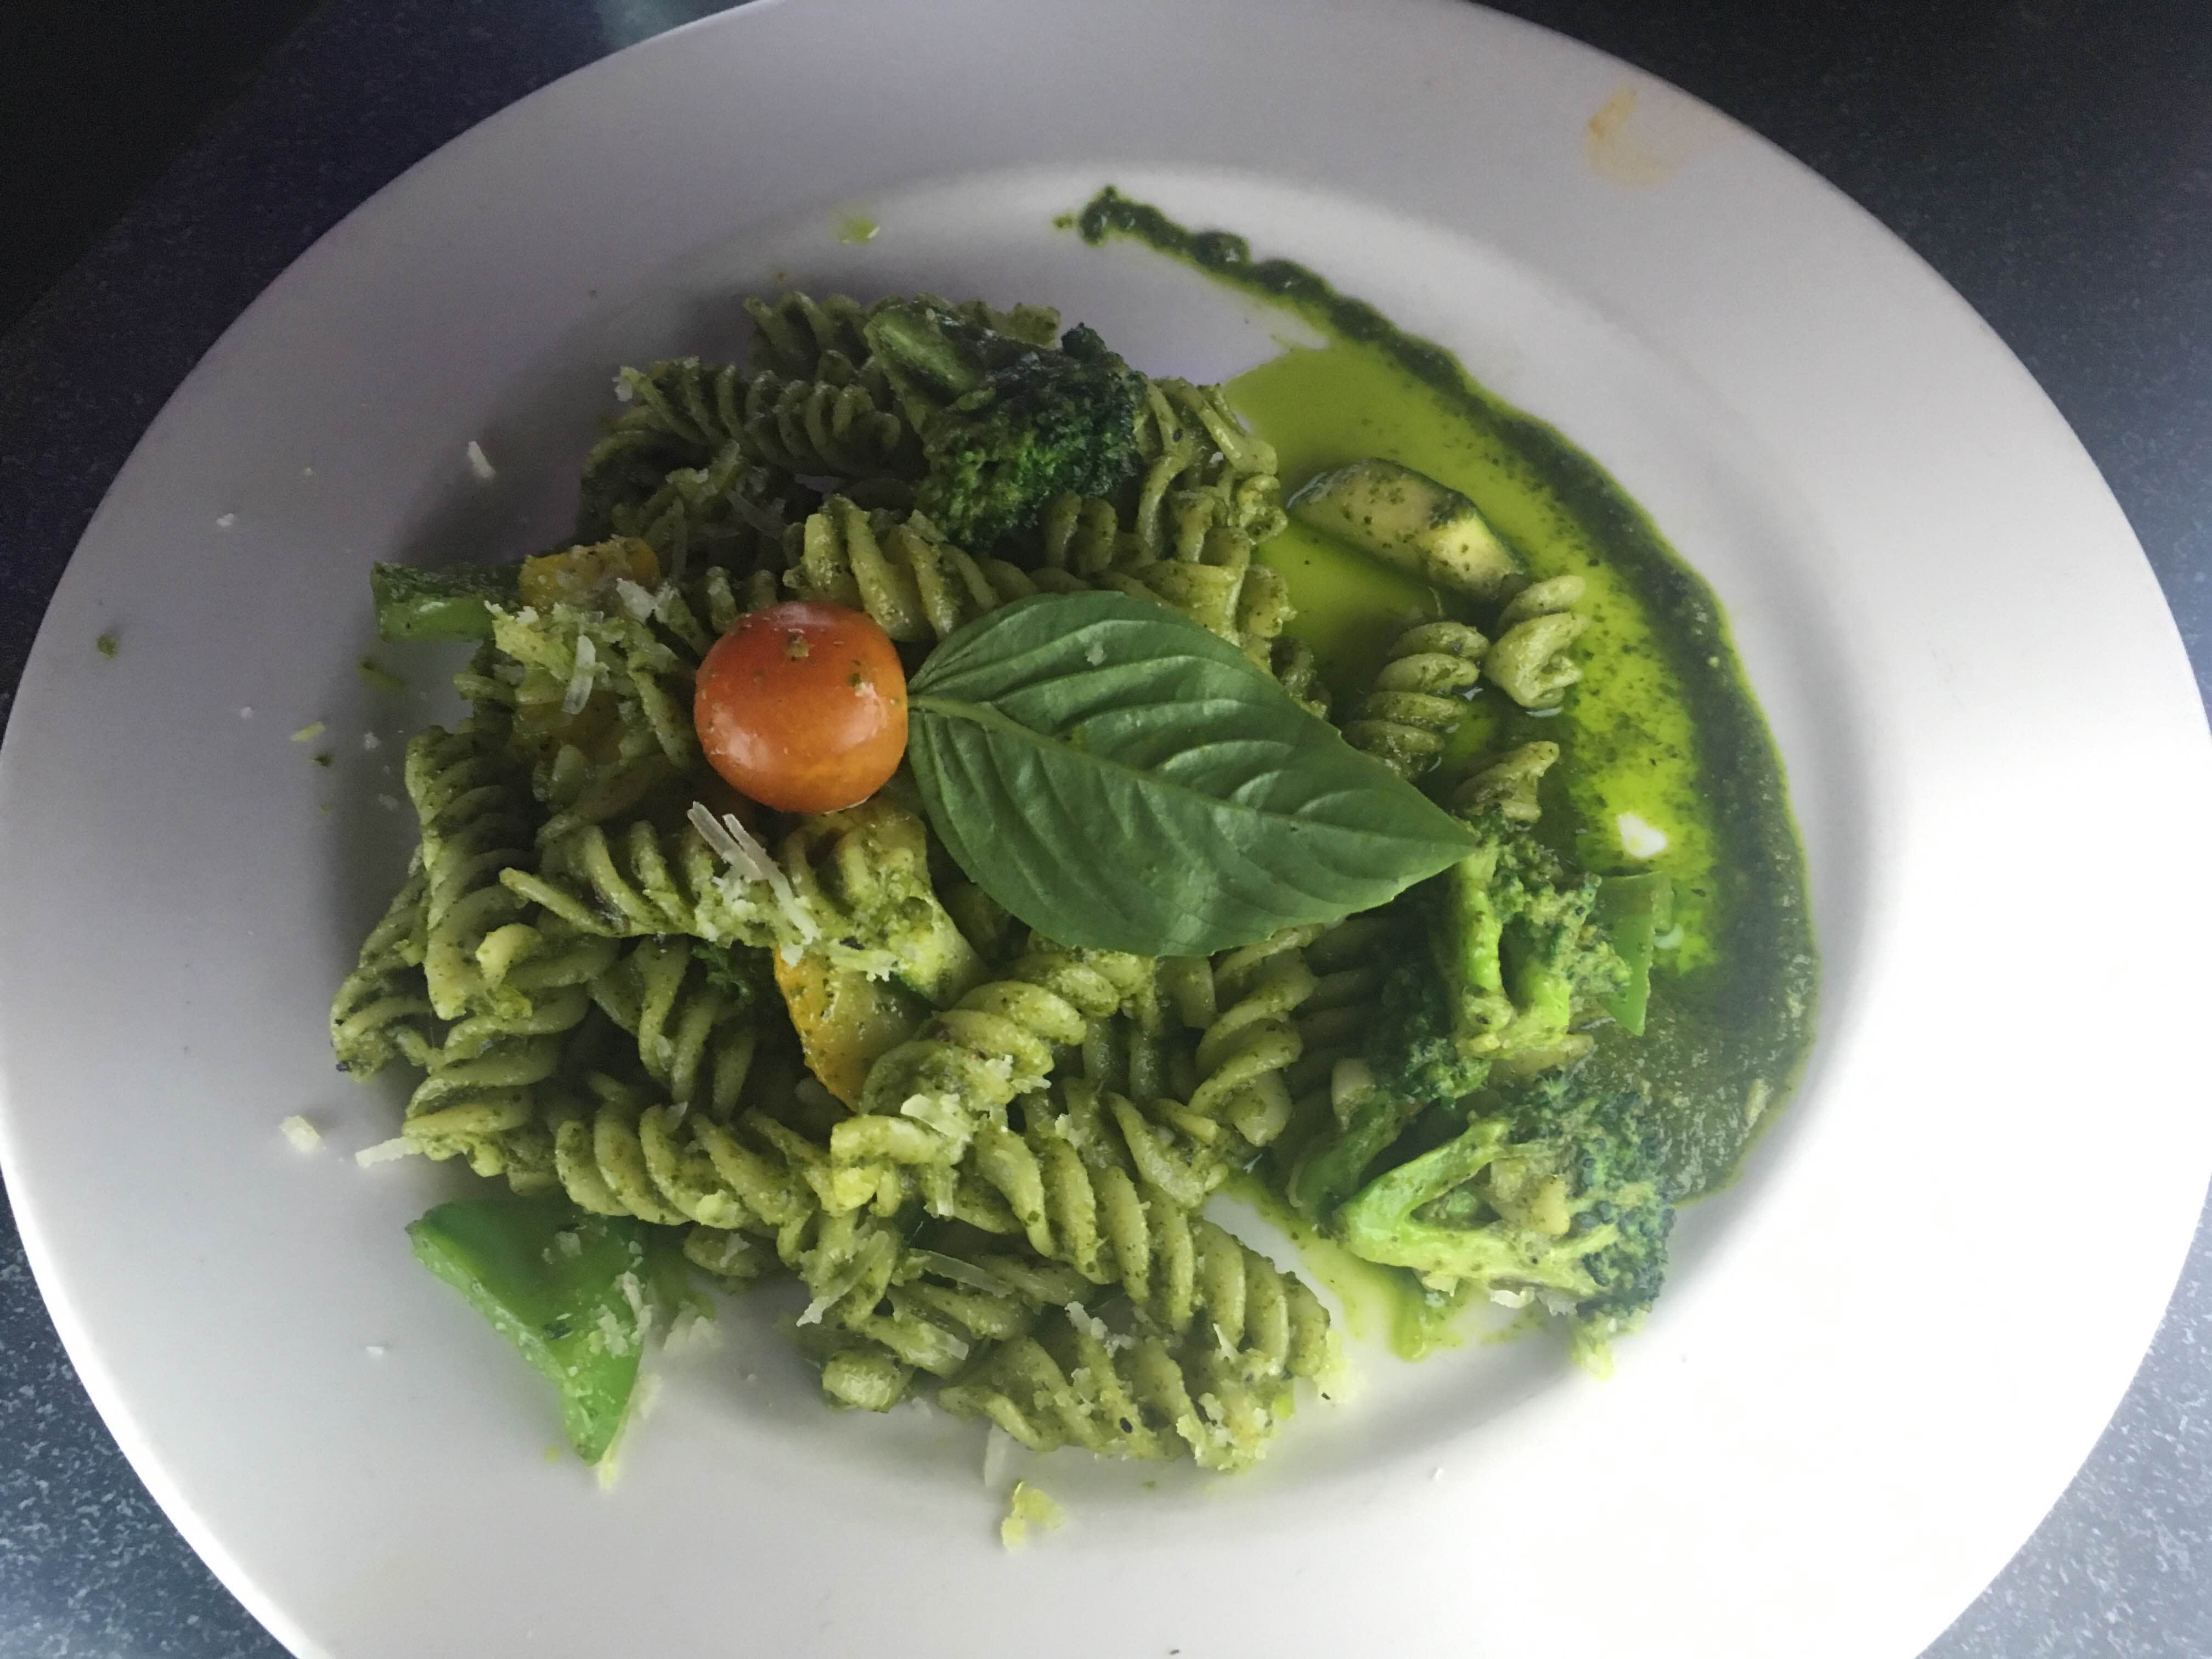 Cuisine,Food,Dish,Ingredient,Fusilli,Leaf vegetable,Vegetarian food,Vegetable,Spinach,Pesto